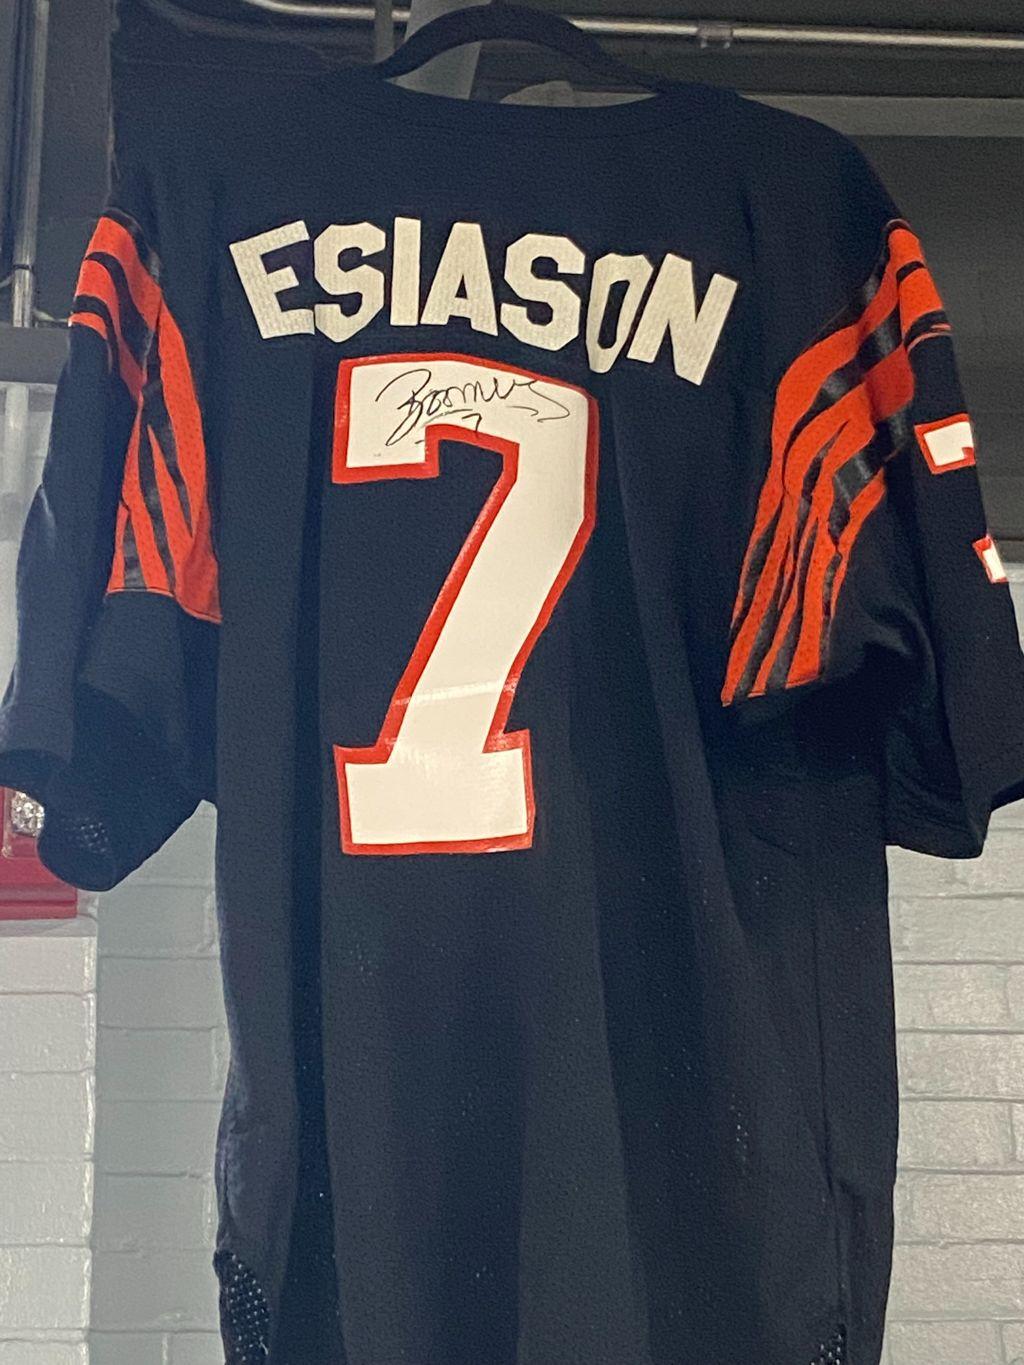 Boomer Esiason signed jersey